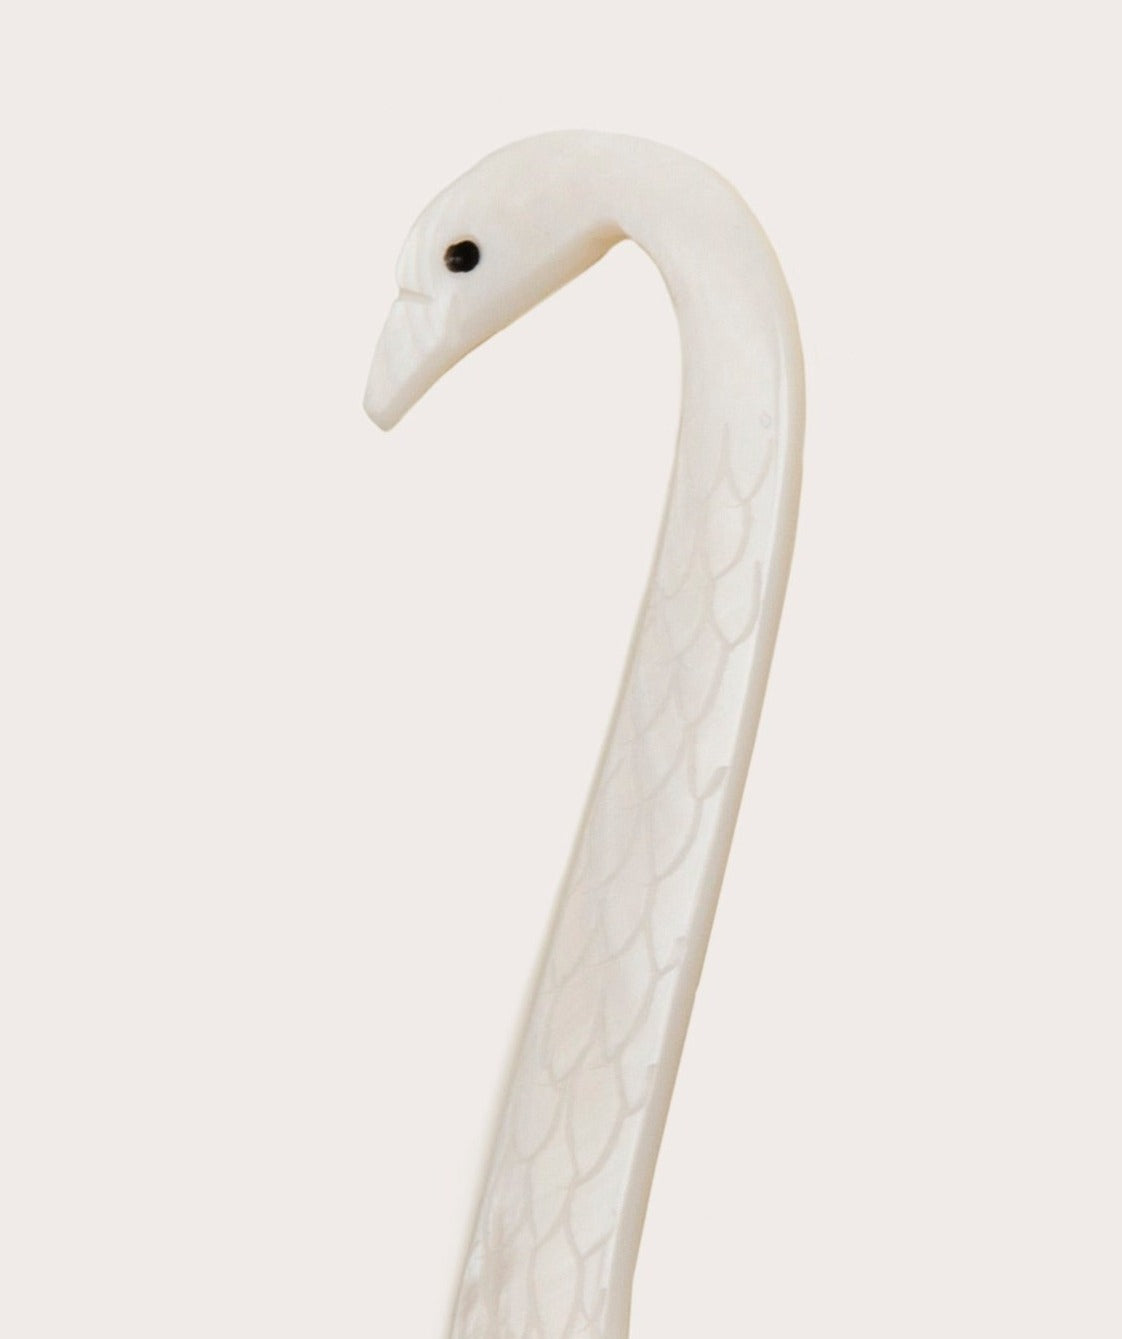 Swan Spoon, Mother of Pearl